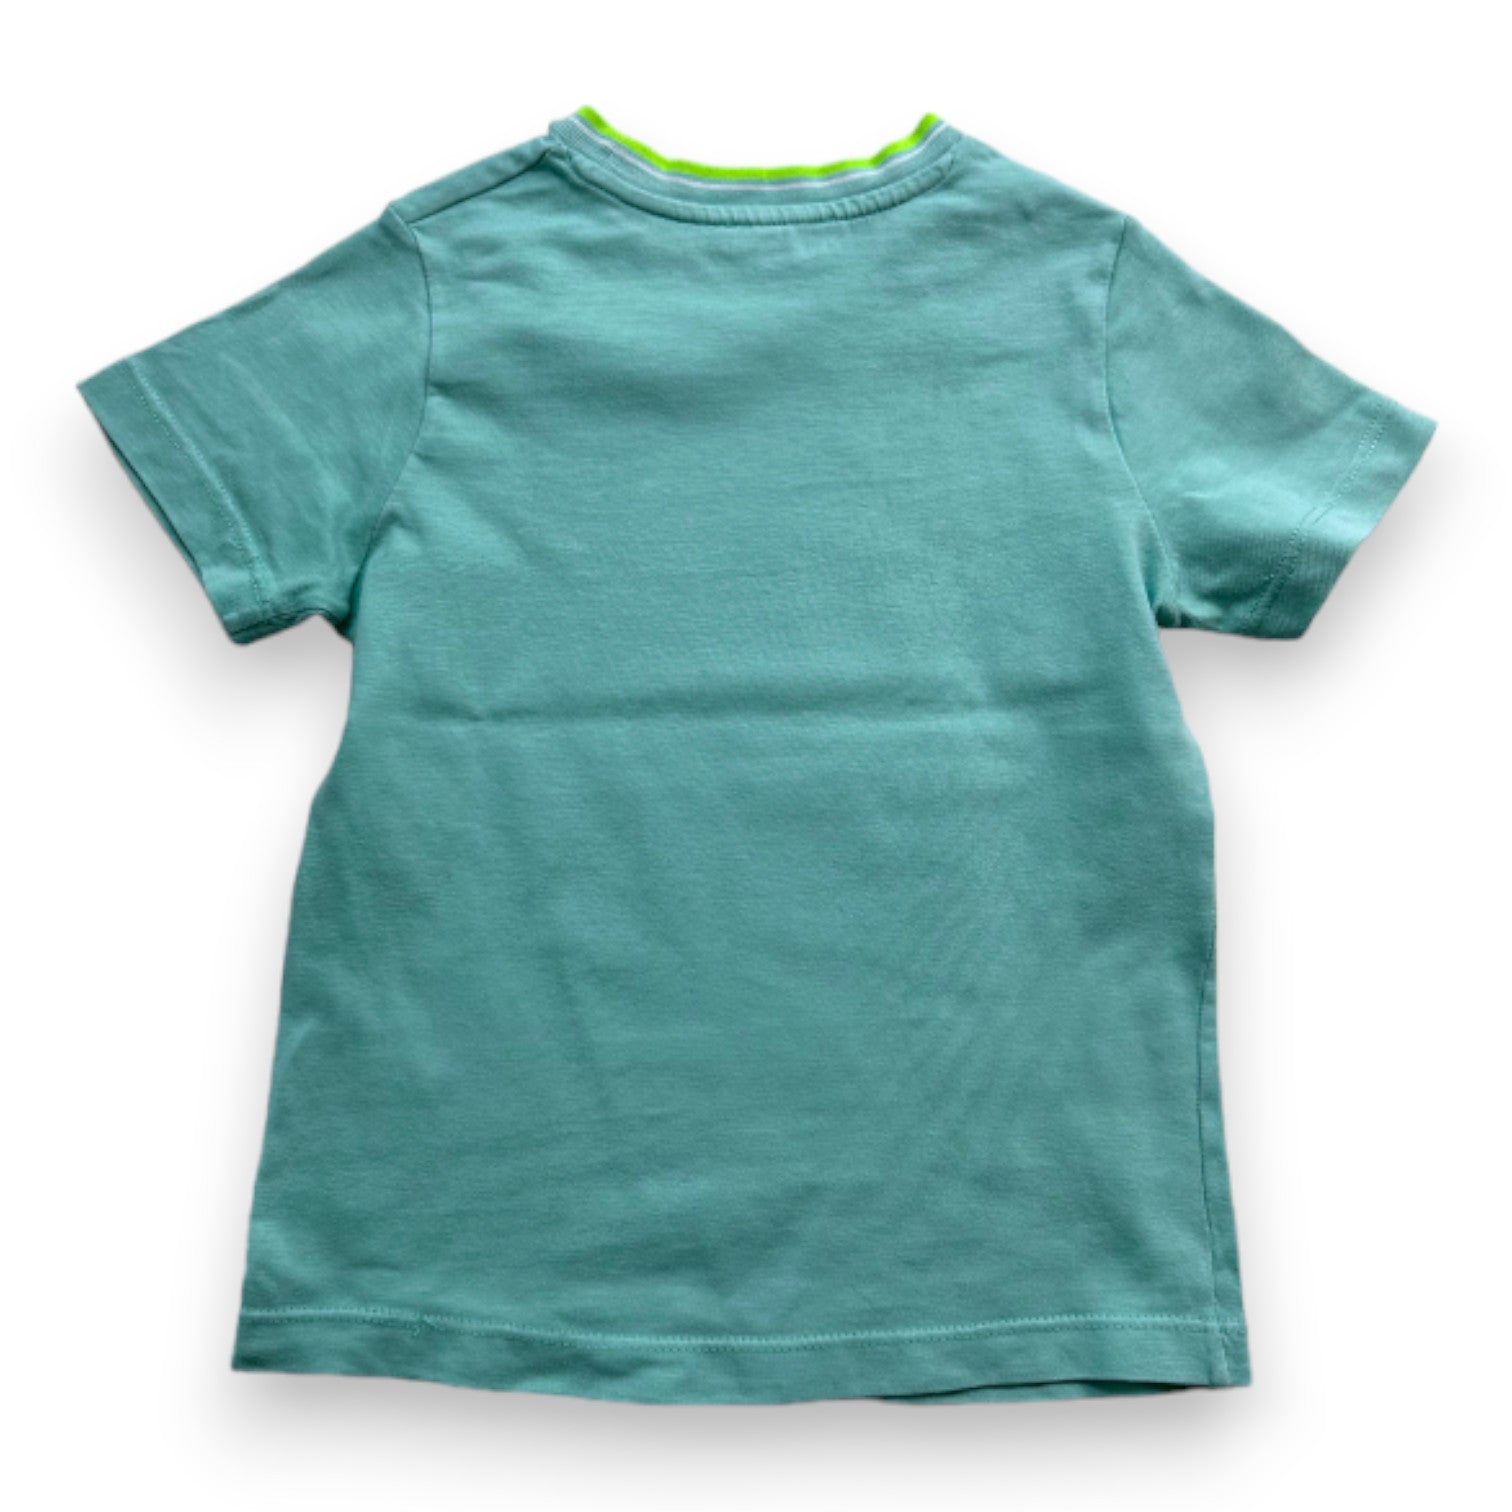 JACADI - T-shirt bleu avec imprimé - 4 ans